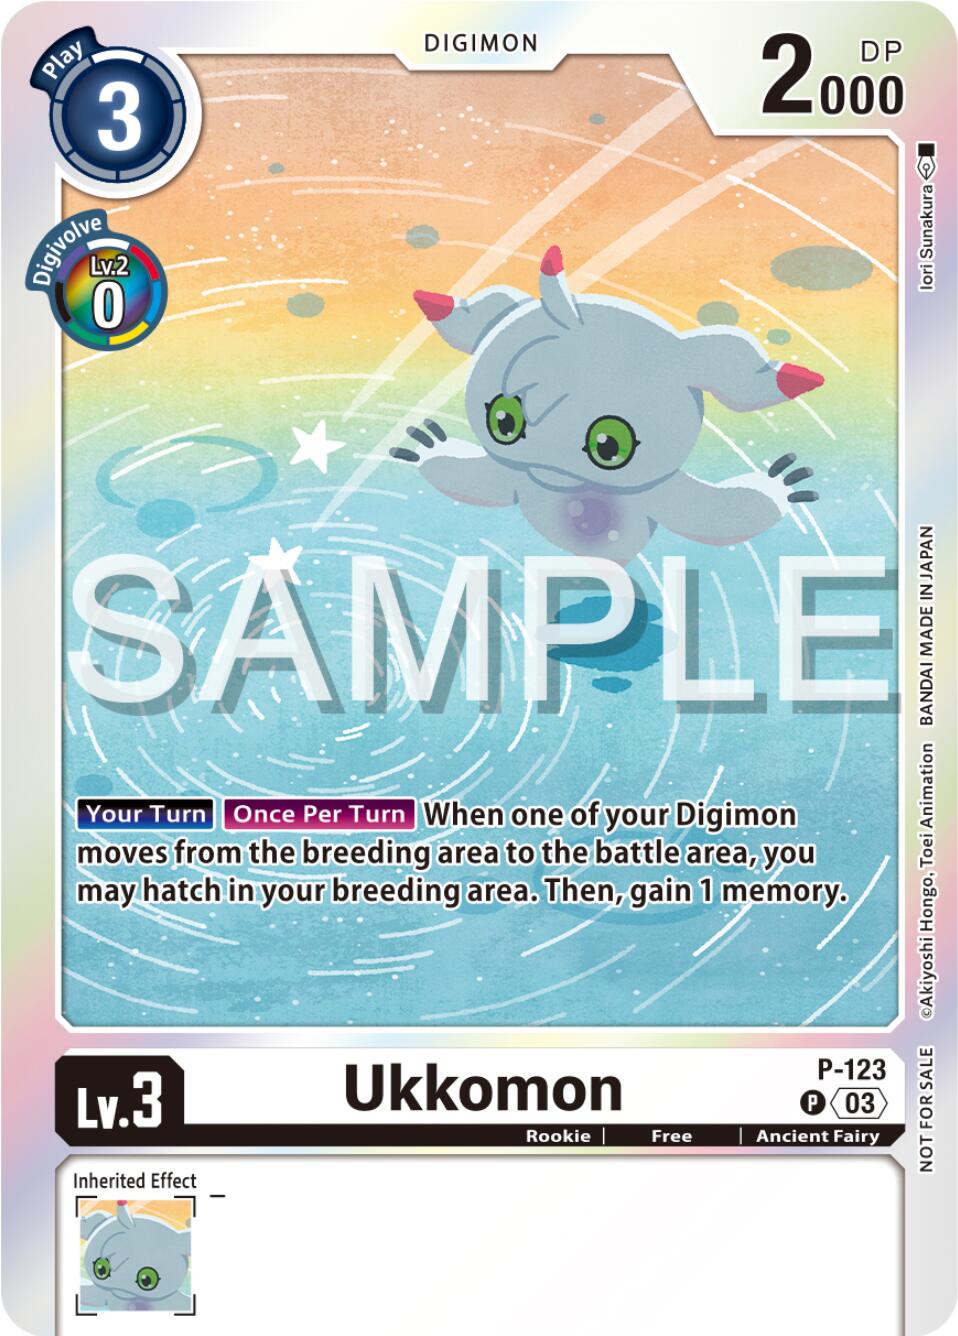 Ukkomon [P-123] (Beginning Observer Pre-Release Winner) [Promotional Cards] | The Time Vault CA